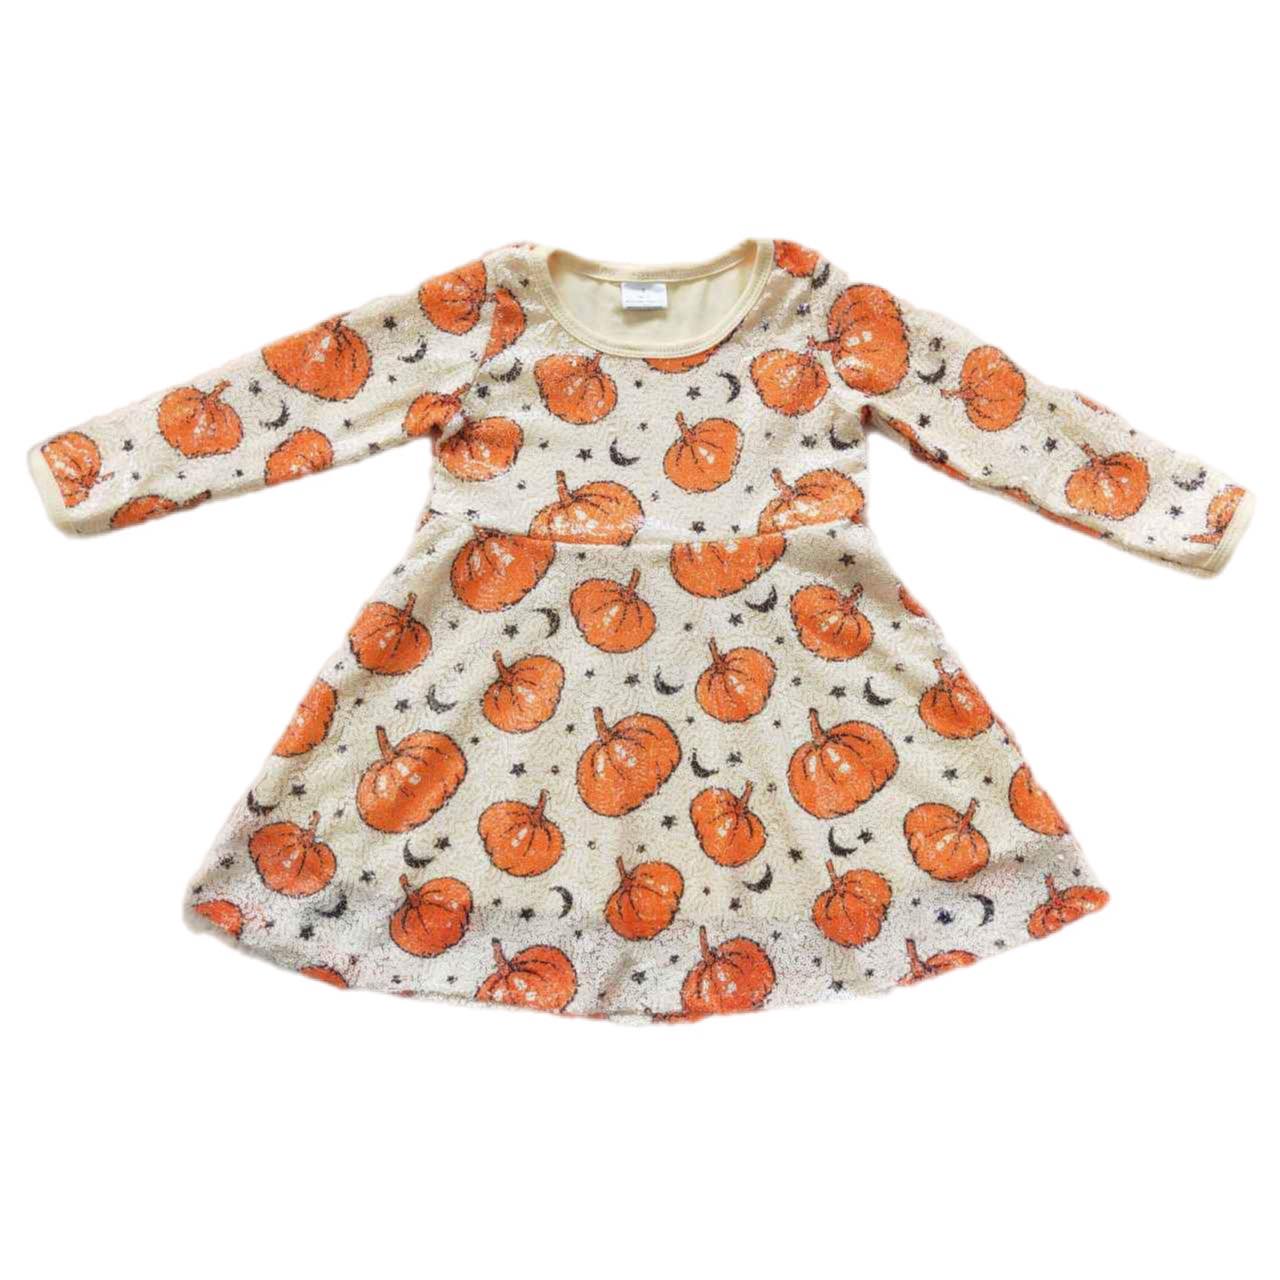 ᴡᴇᴇᴋʟʏ ᴘʀᴇ ᴏʀᴅᴇʀ Pumpkin Sequin Overlay Dress